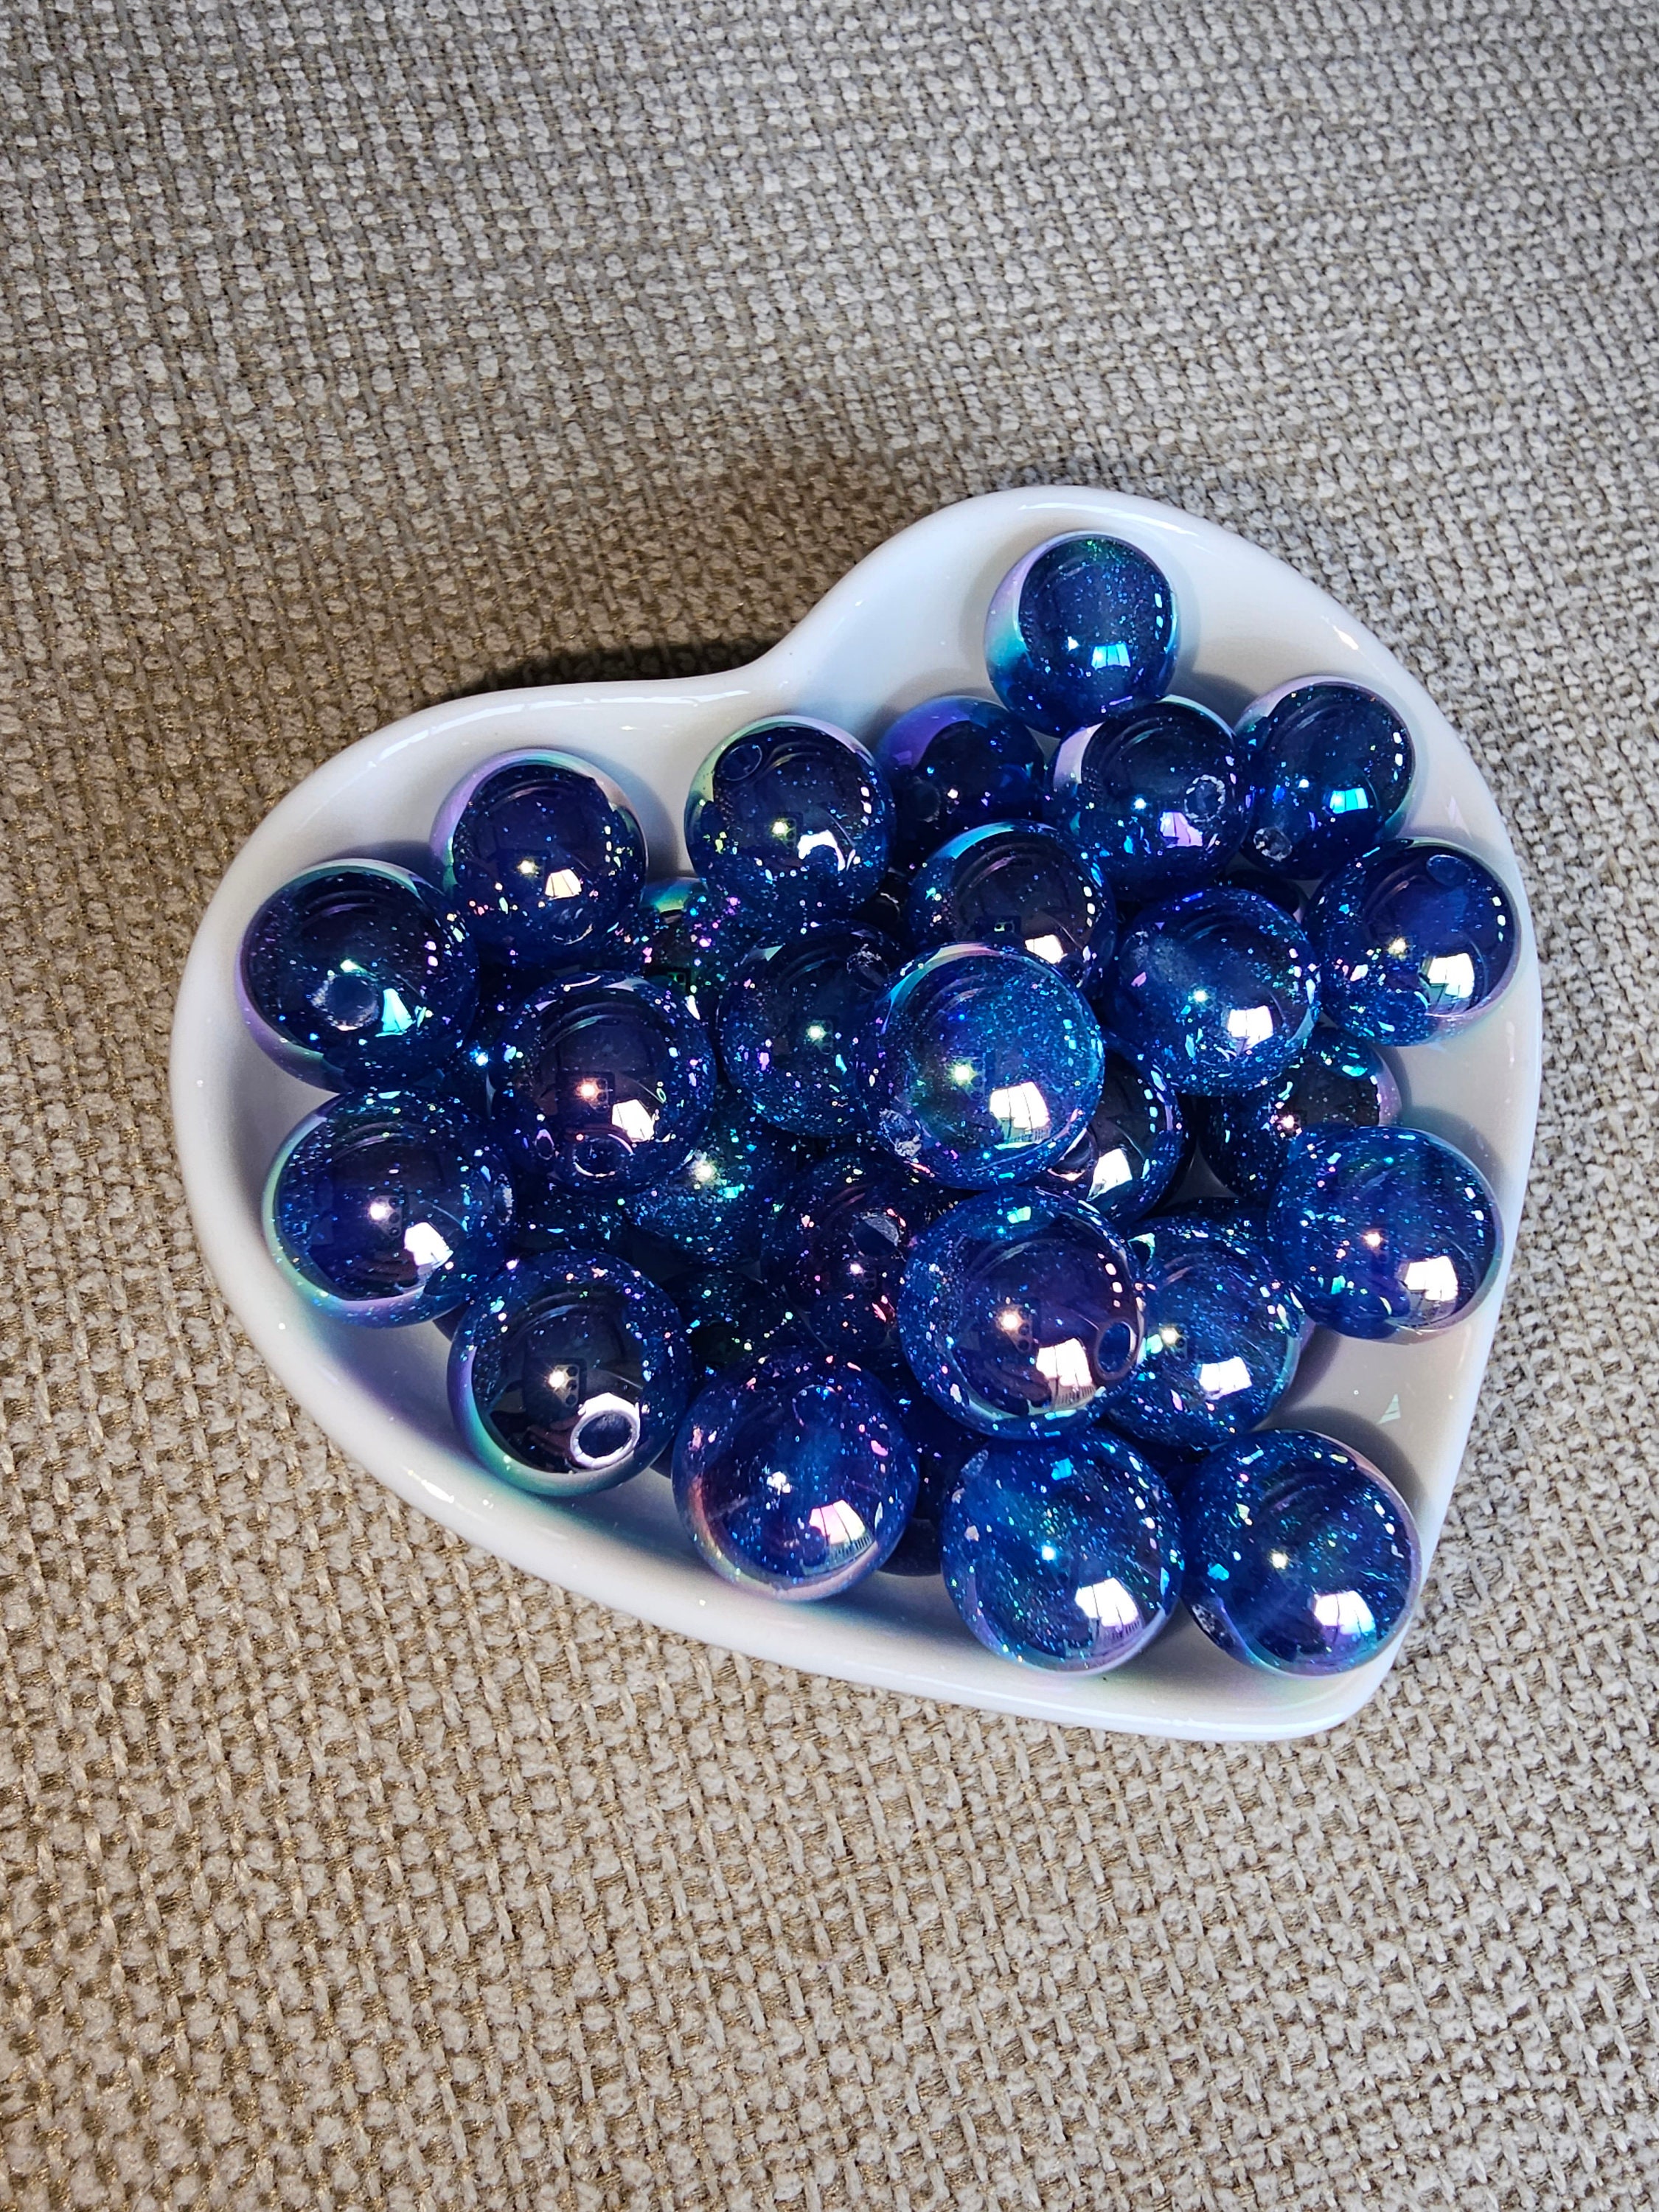 AB Transparent Baby Blue Acrylic Beads Iridescent Beads - Round Clear  Gumball Bubblegum Glitter Beads - 6mm 8mm 10mm